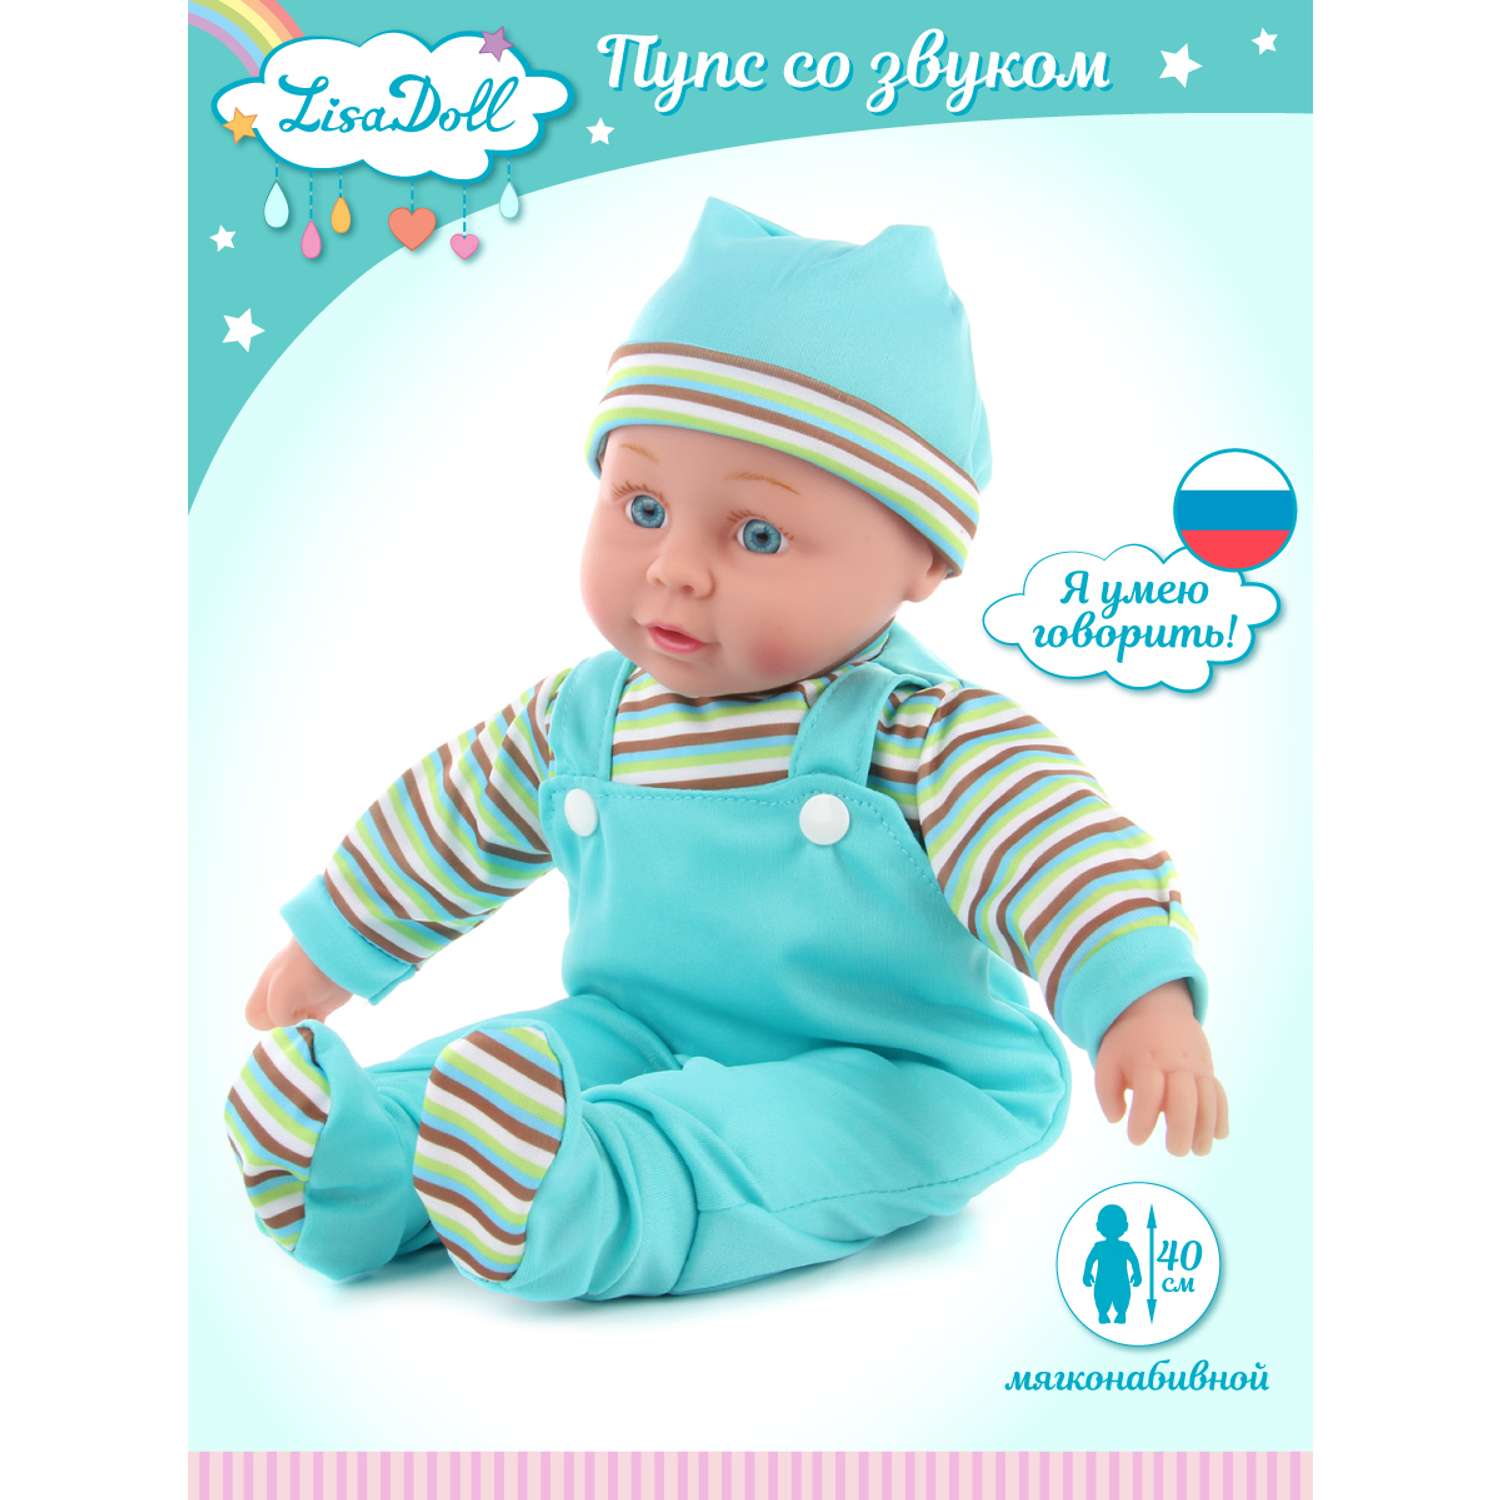 Пупс Lisa Doll в голубом костюме 40 см русская озвучка 97046 - фото 1